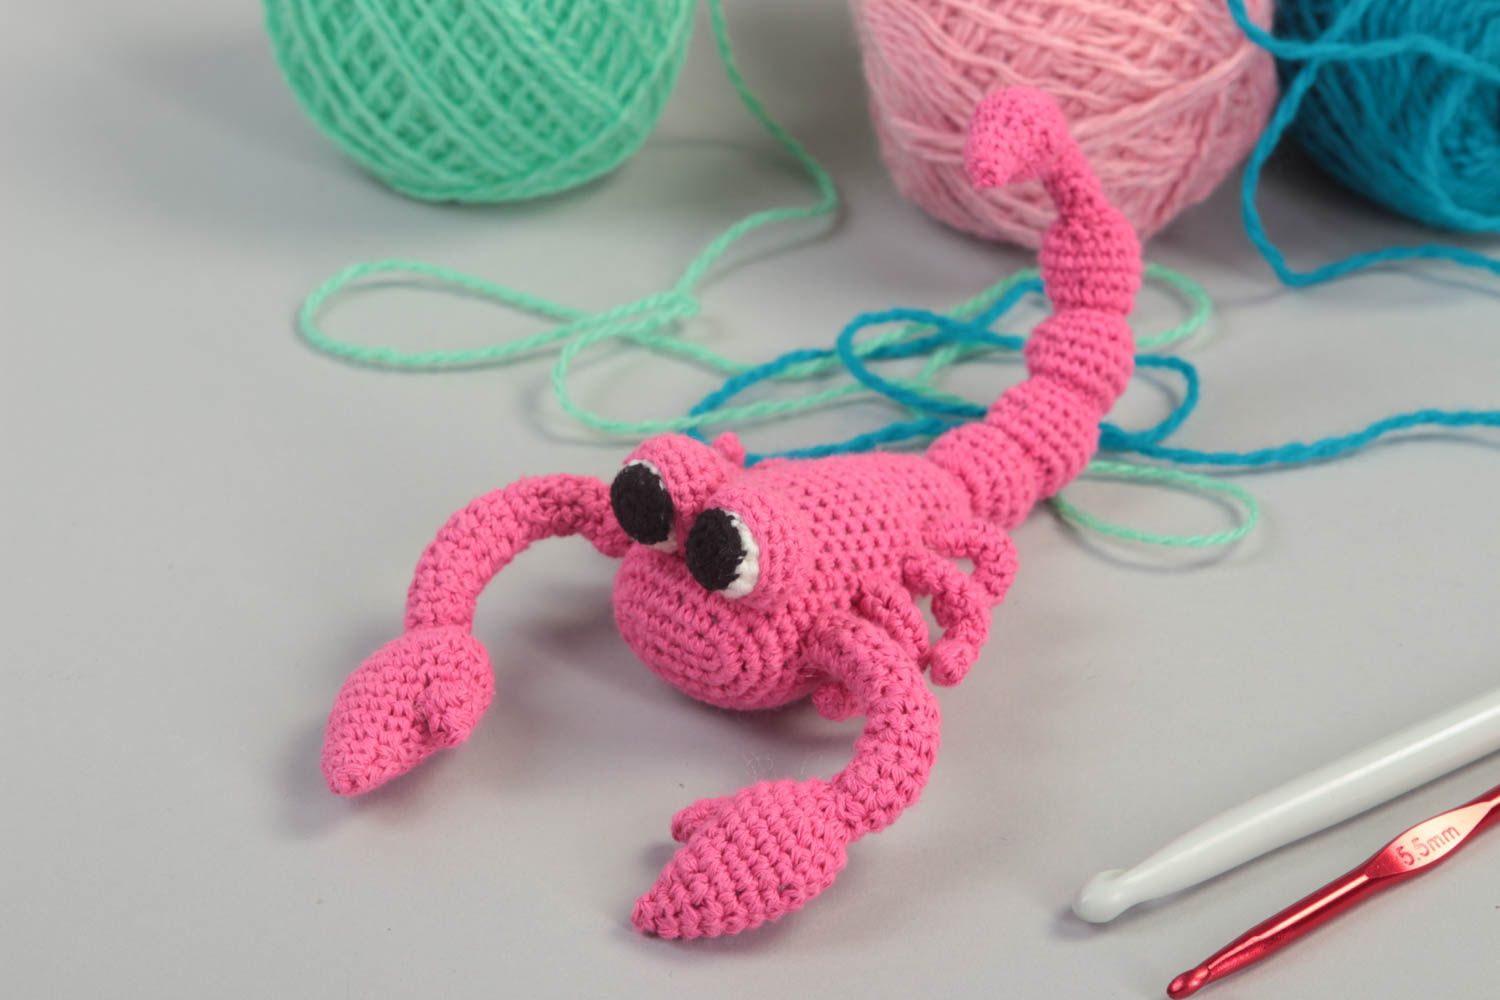 Cute handmade crochet toy unusual stuffed toy childrens soft toys gift ideas photo 1